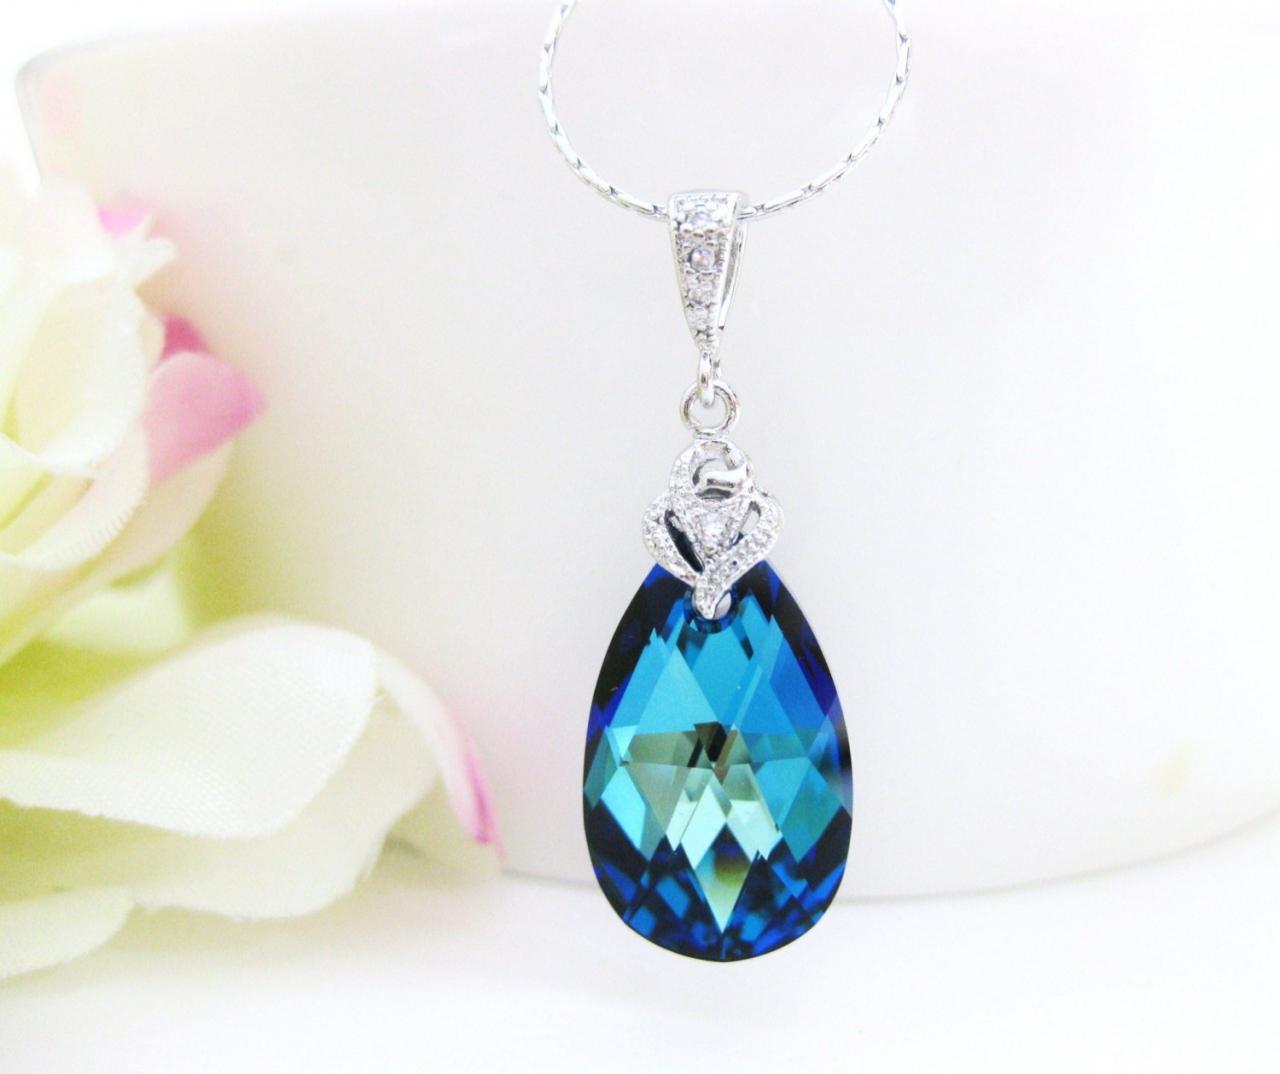 Bermuda Blue Swarovski Crystal Teardrop Necklace Wedding Jewelry Bridal Teardrop Necklace Bridesmaid Gift Blue Crystal Necklace (n035)